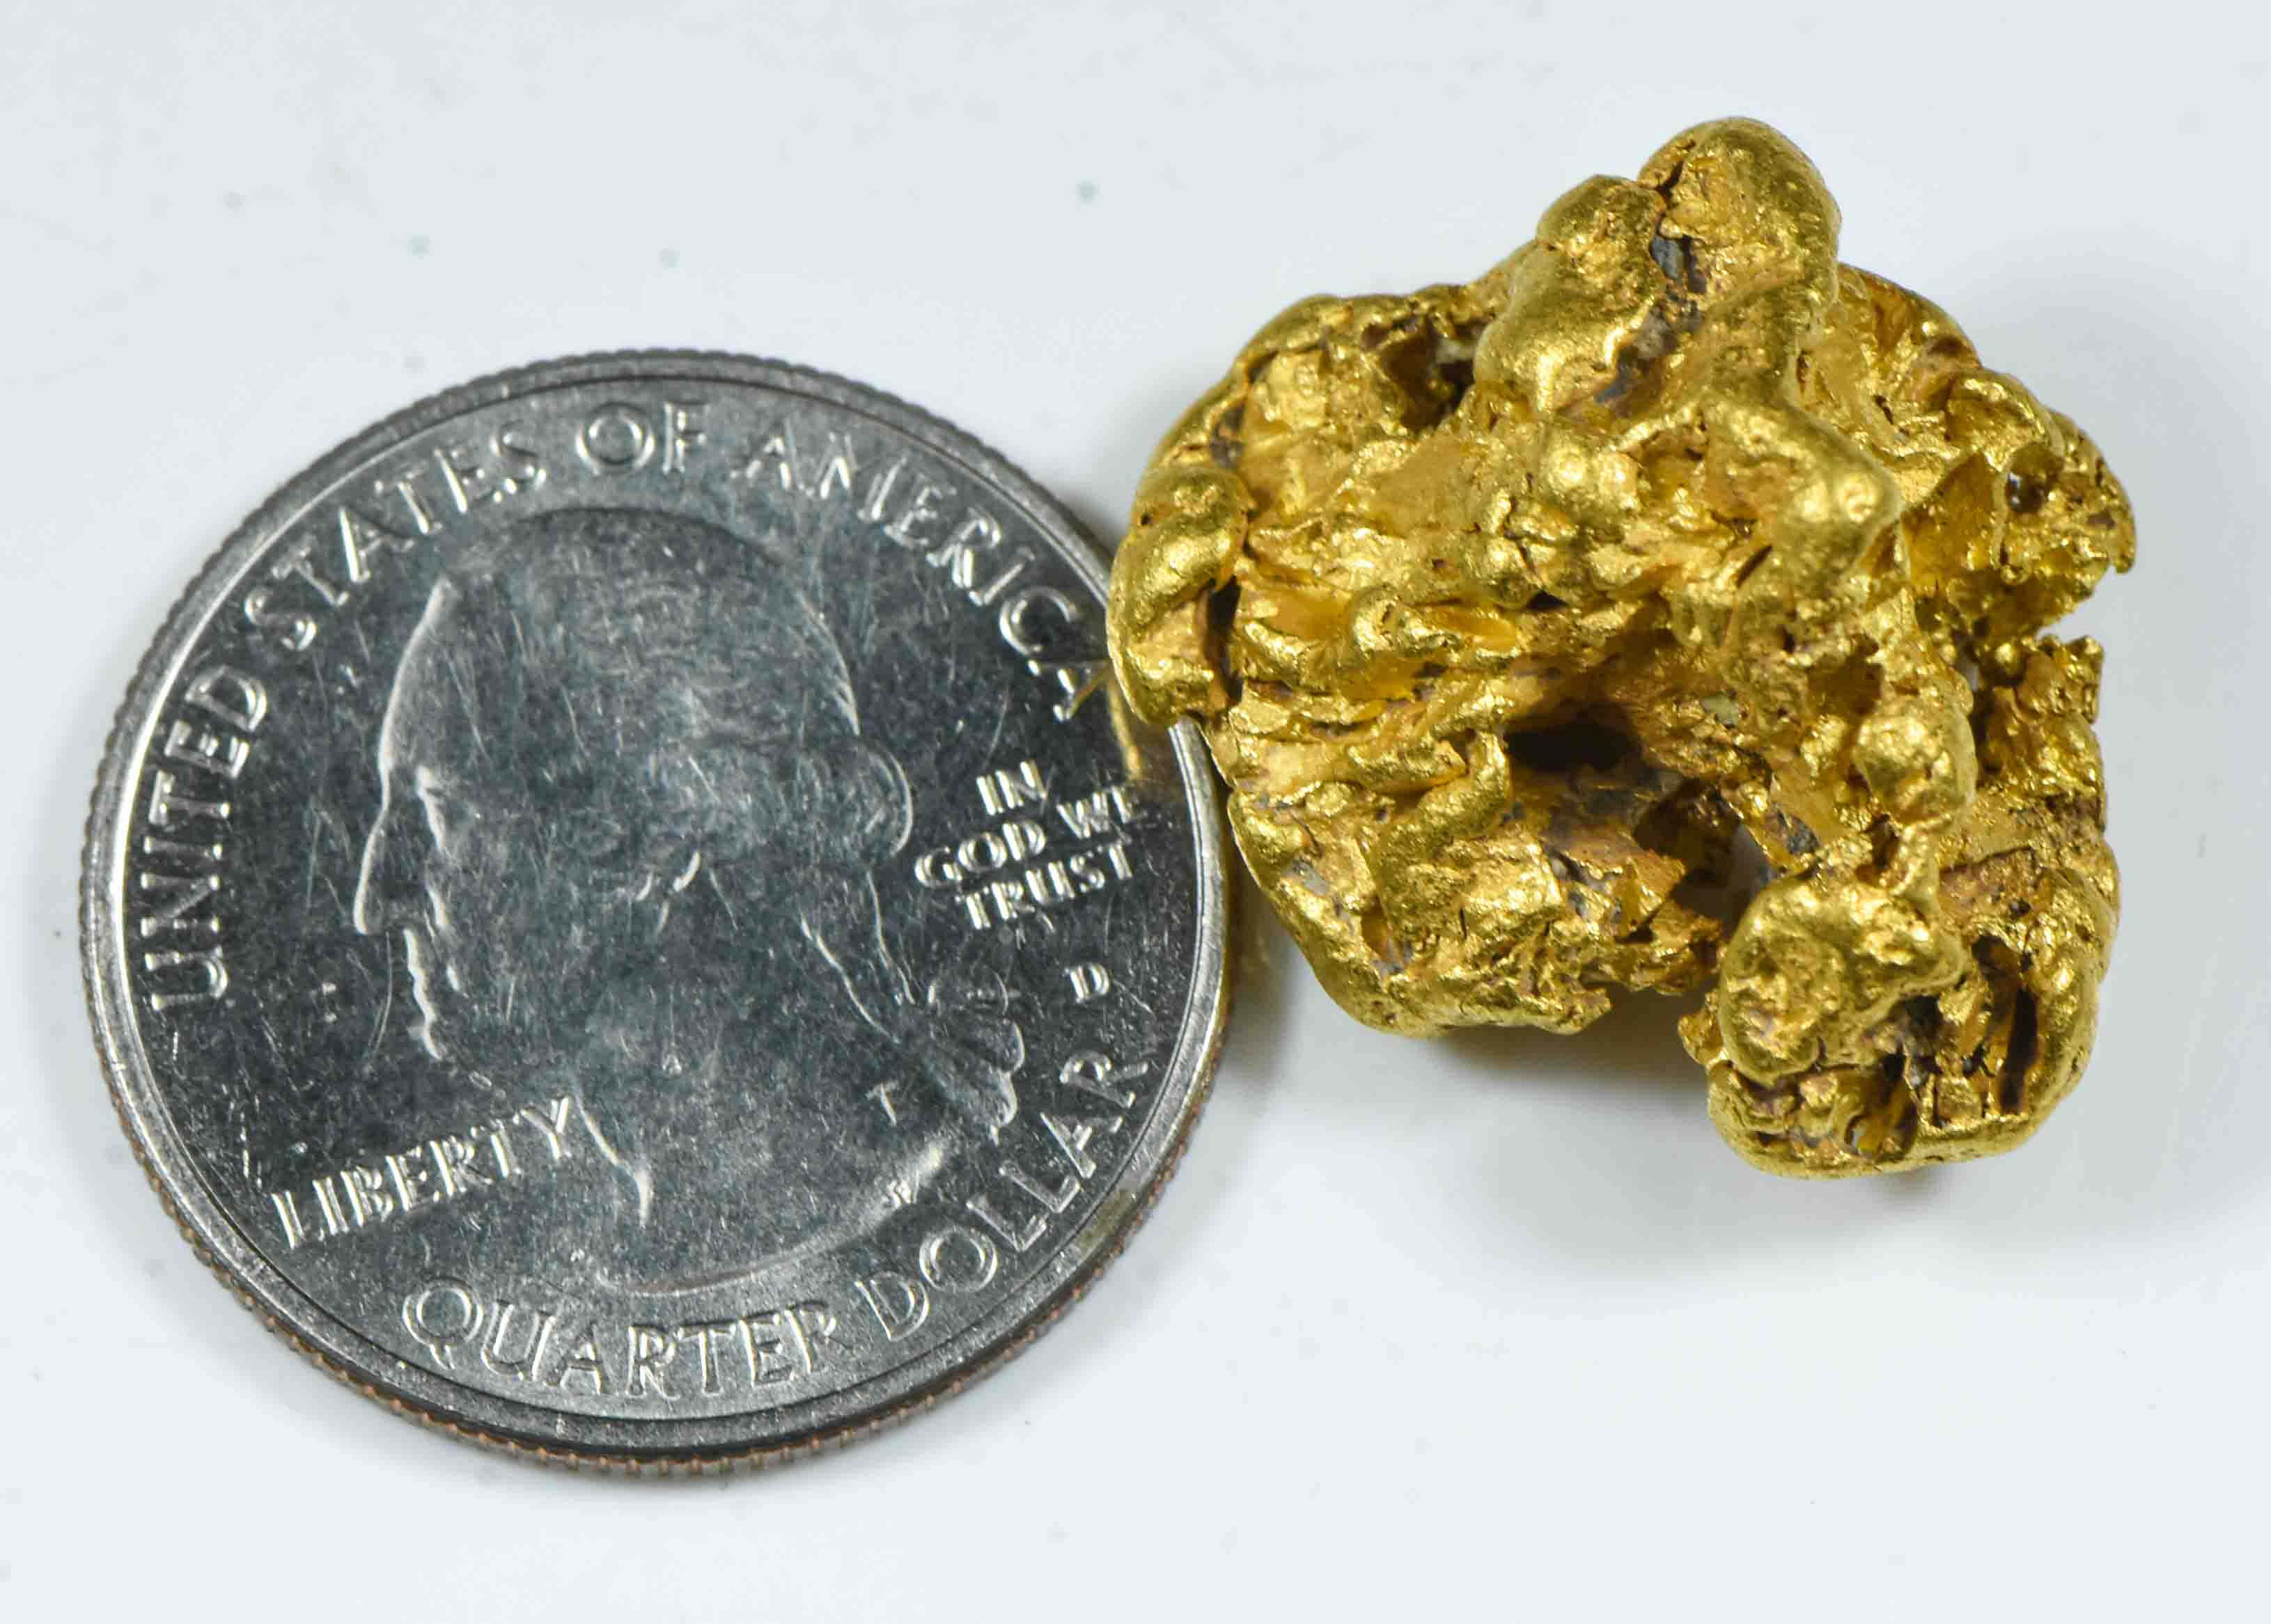 #1145 Natural Gold Nugget Australian 19.42 Grams Genuine